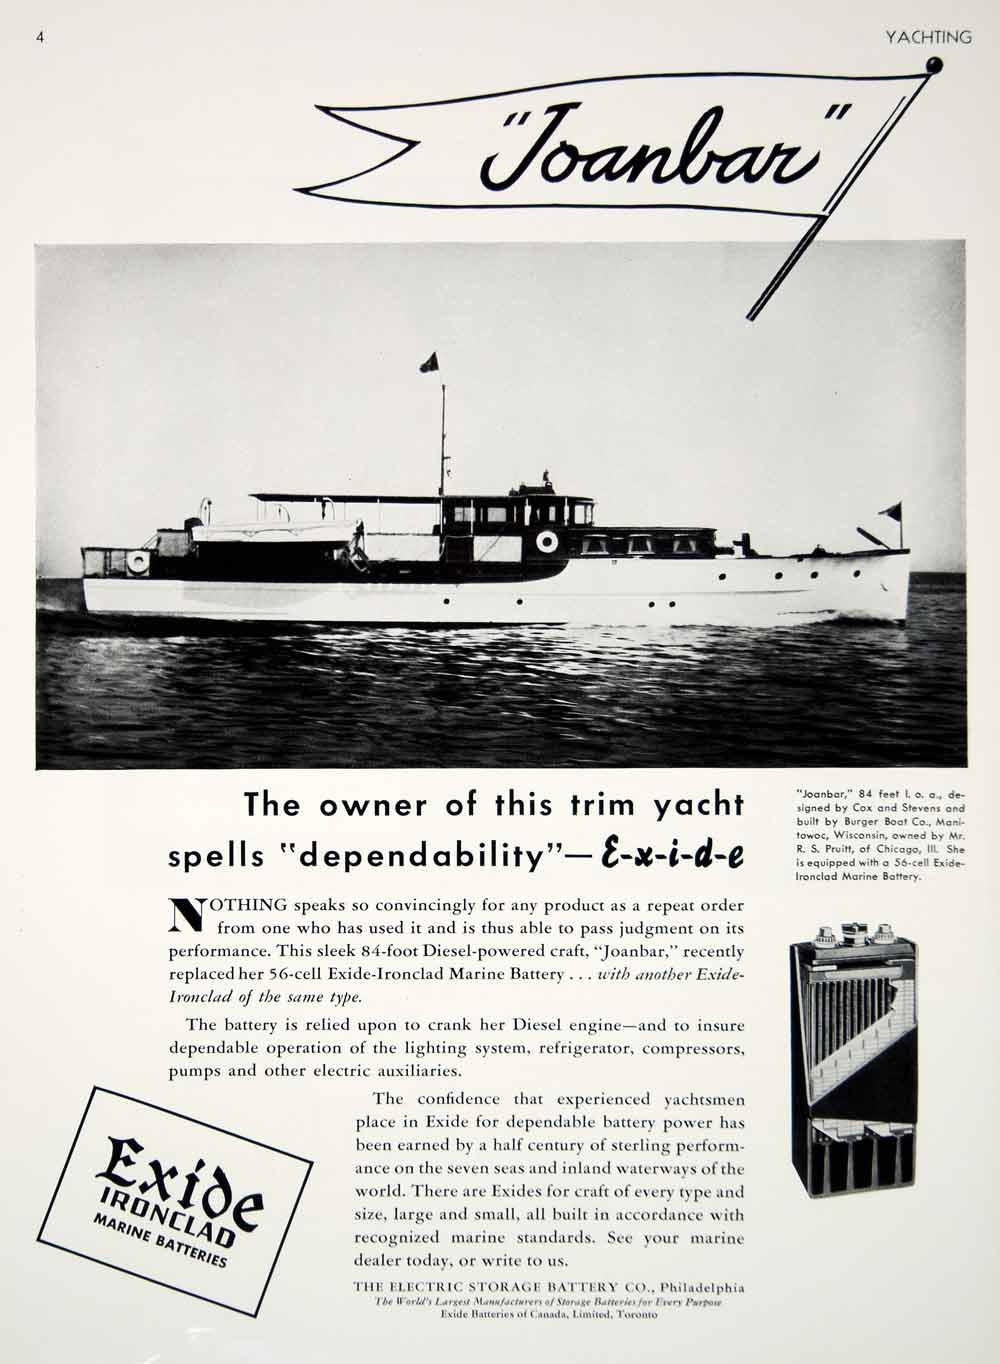 1940 Ad Vintage Exide Marine Batteries Joanbar Yacht R. S. Pruitt Motor Boat